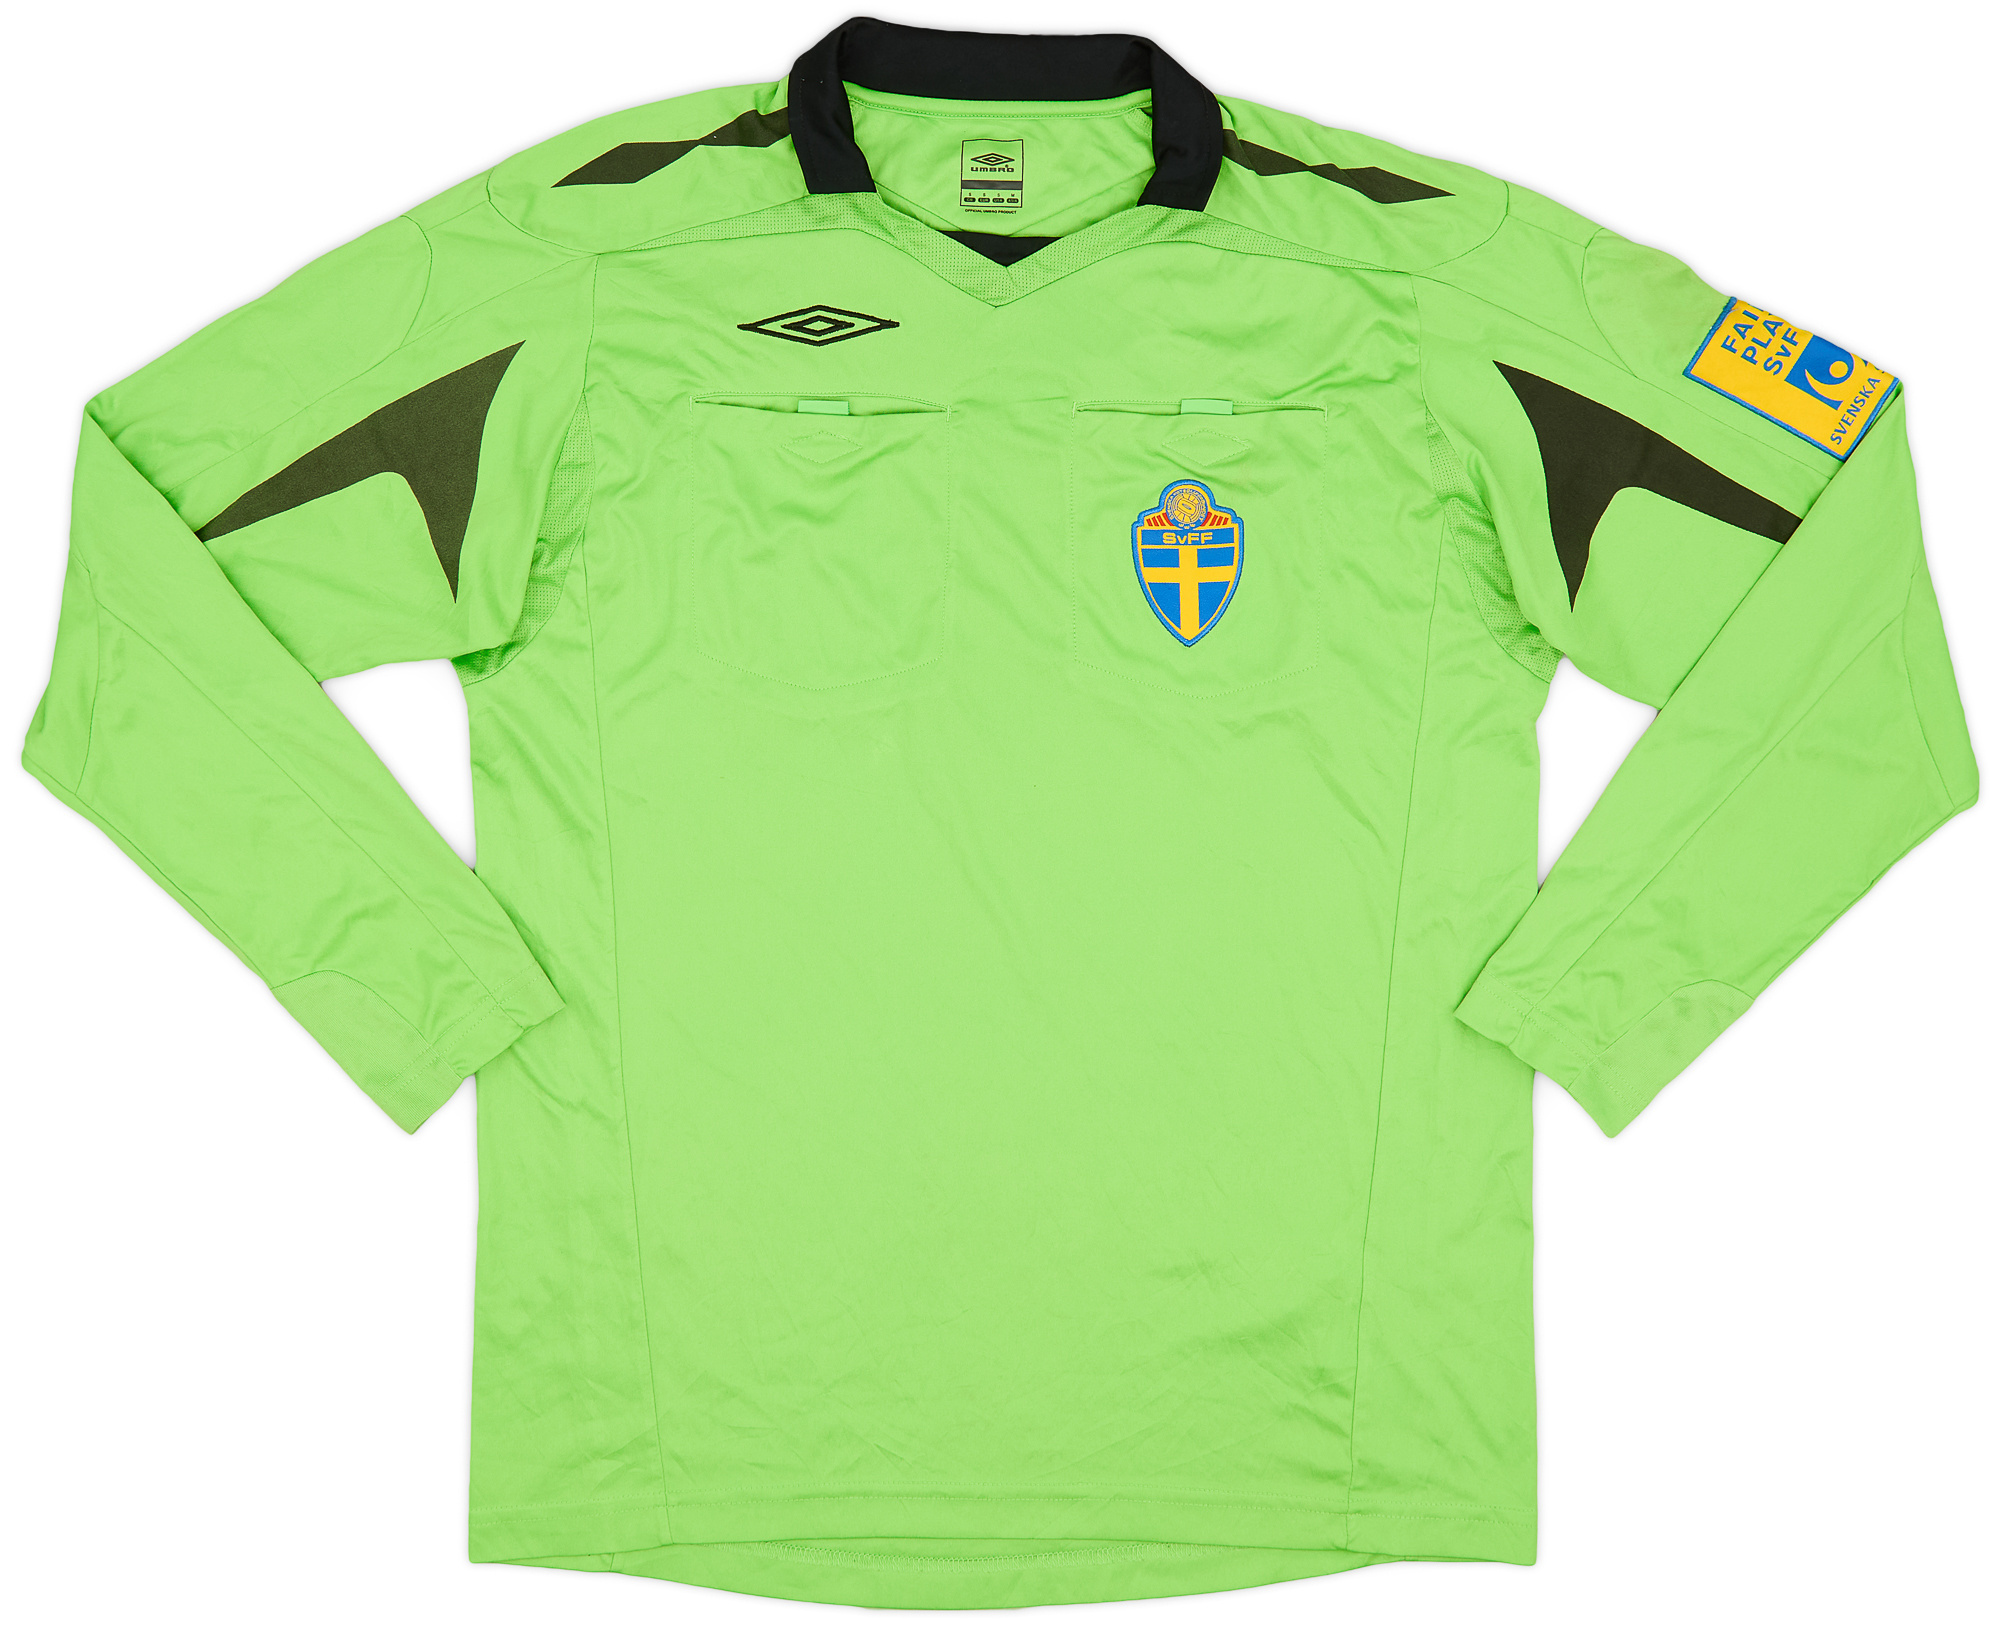 2000s Sweden Umbro Referee Shirt - 8/10 - ()